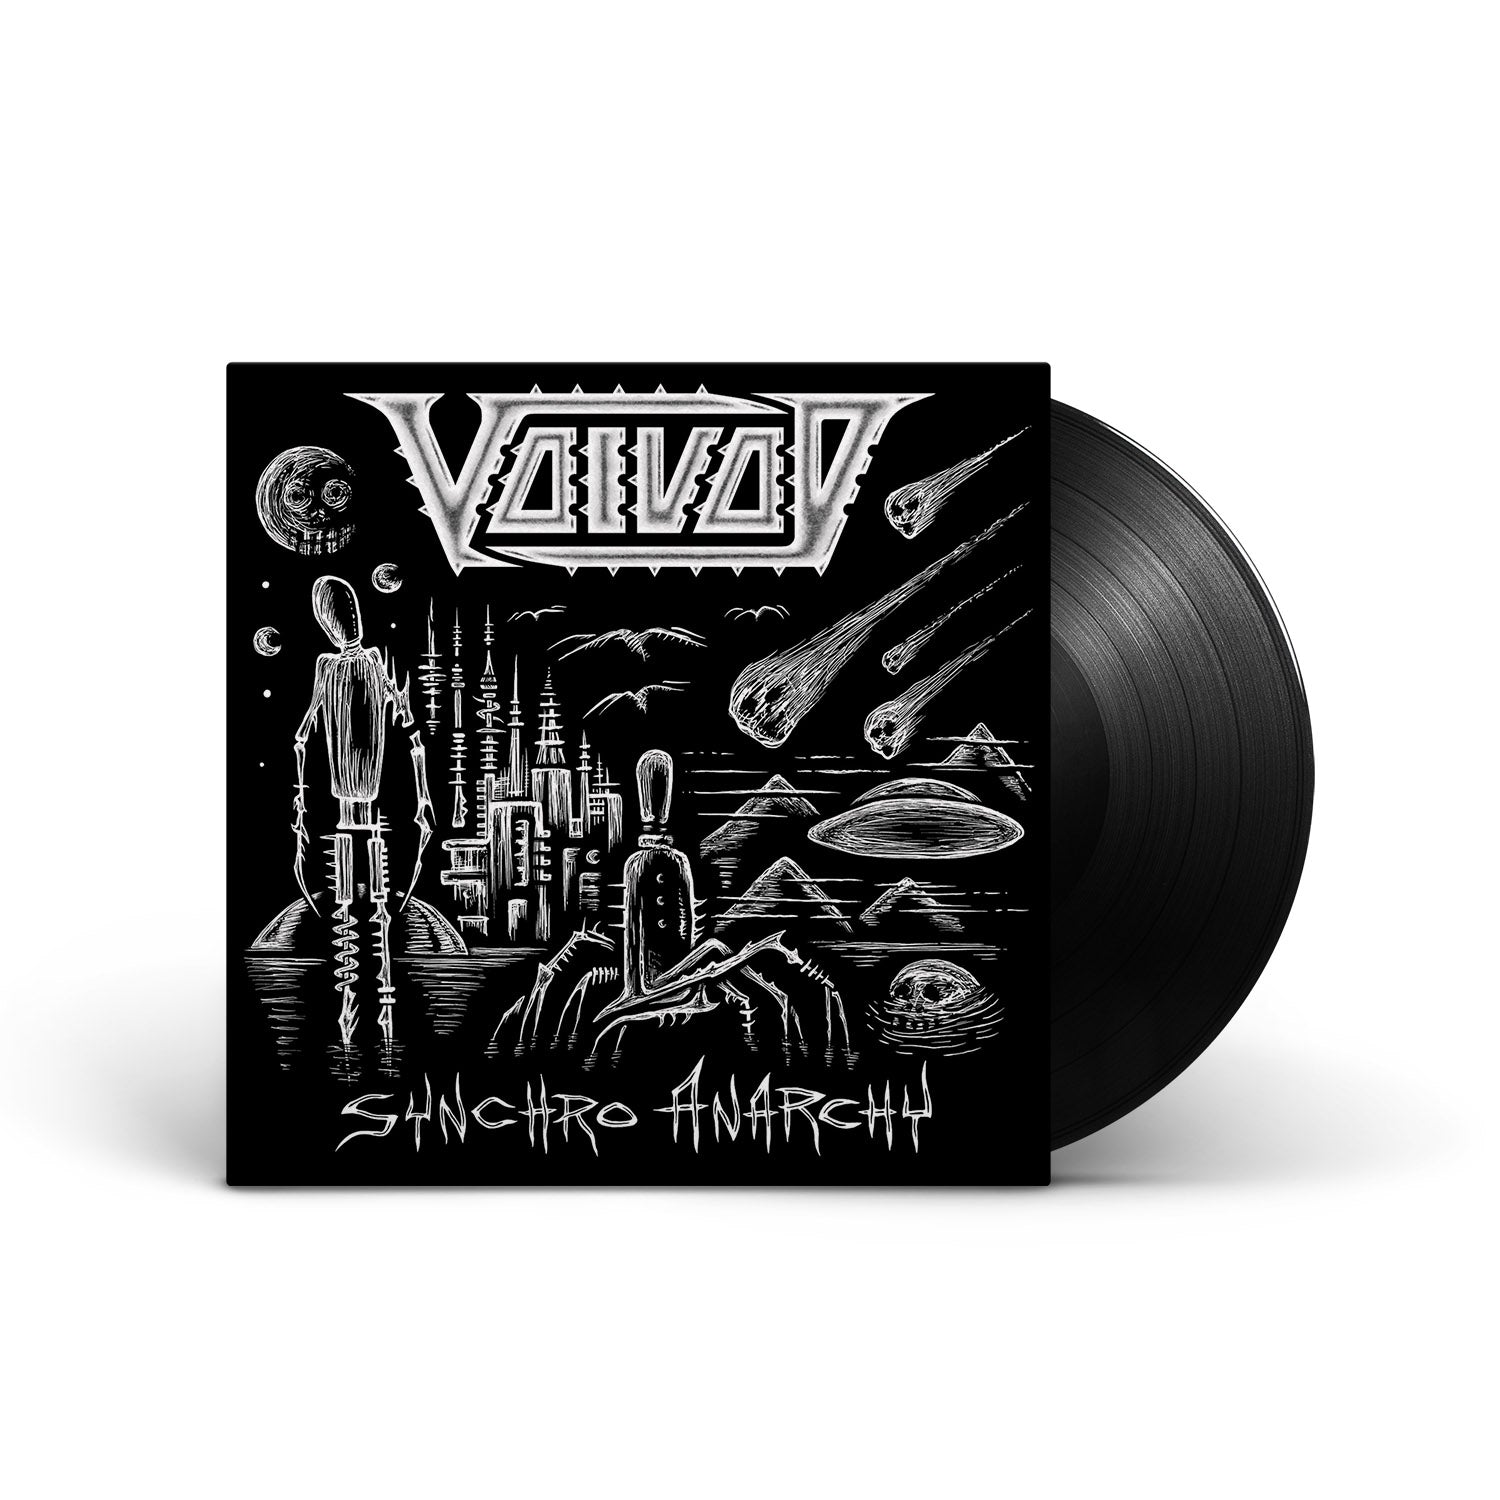 VOIVOD - Synchro Anarchy - LP